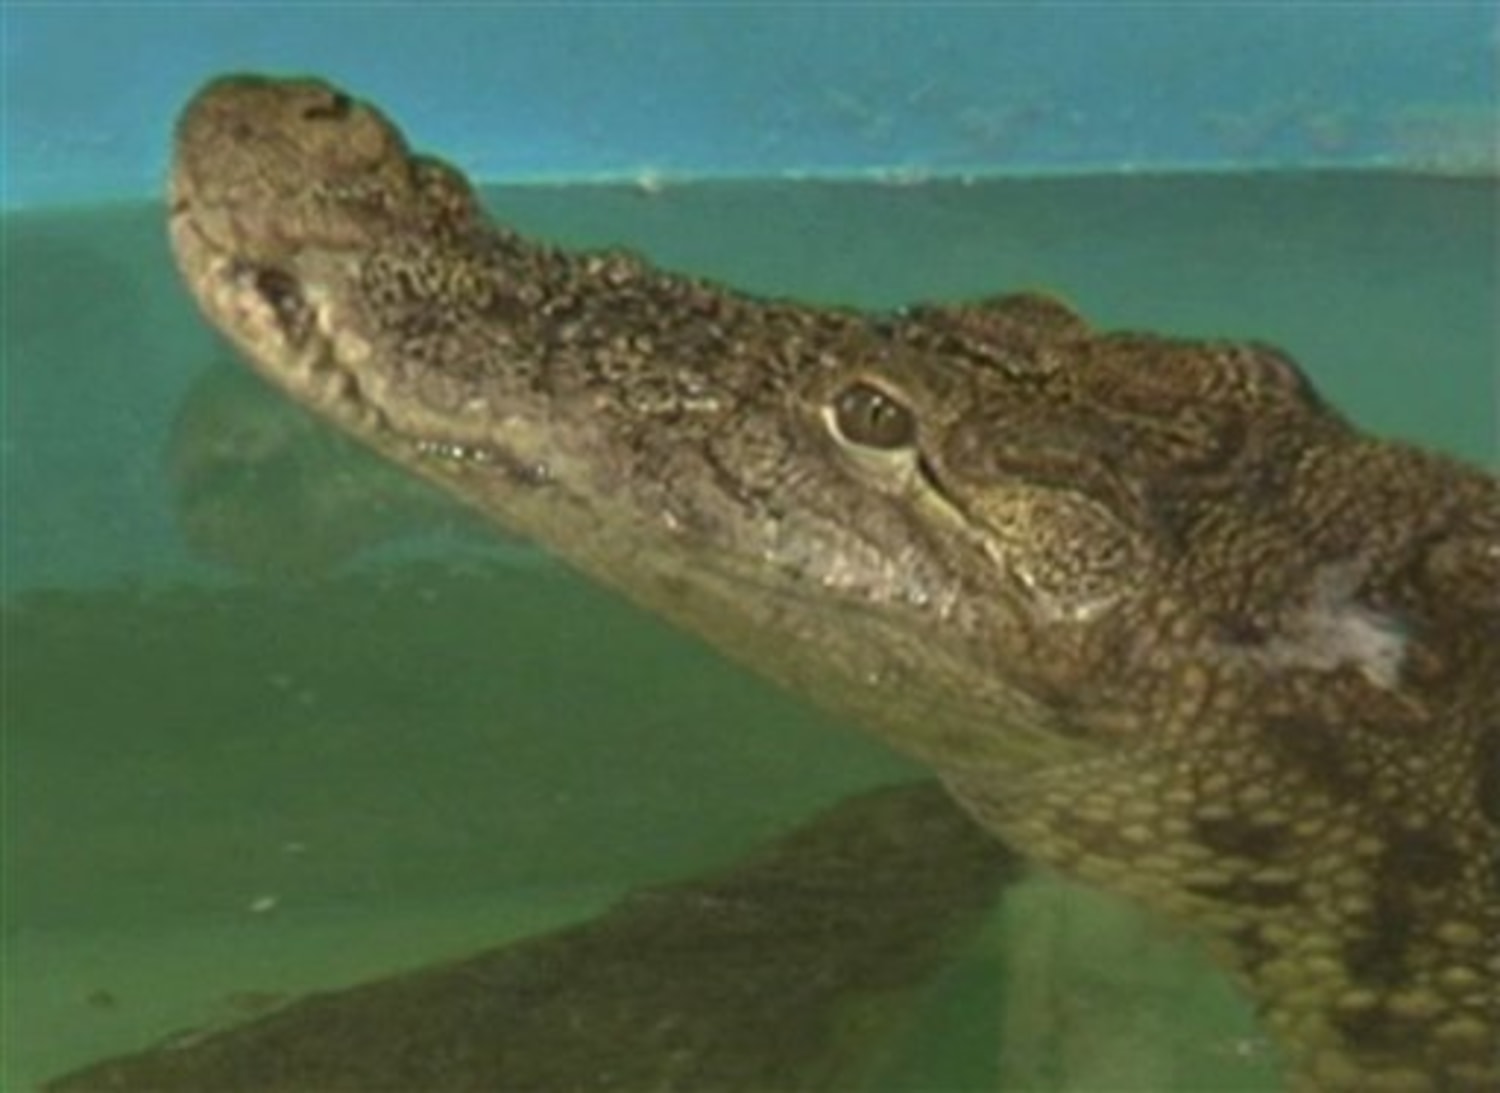 Phone keeps ringing in crocodile's tummy